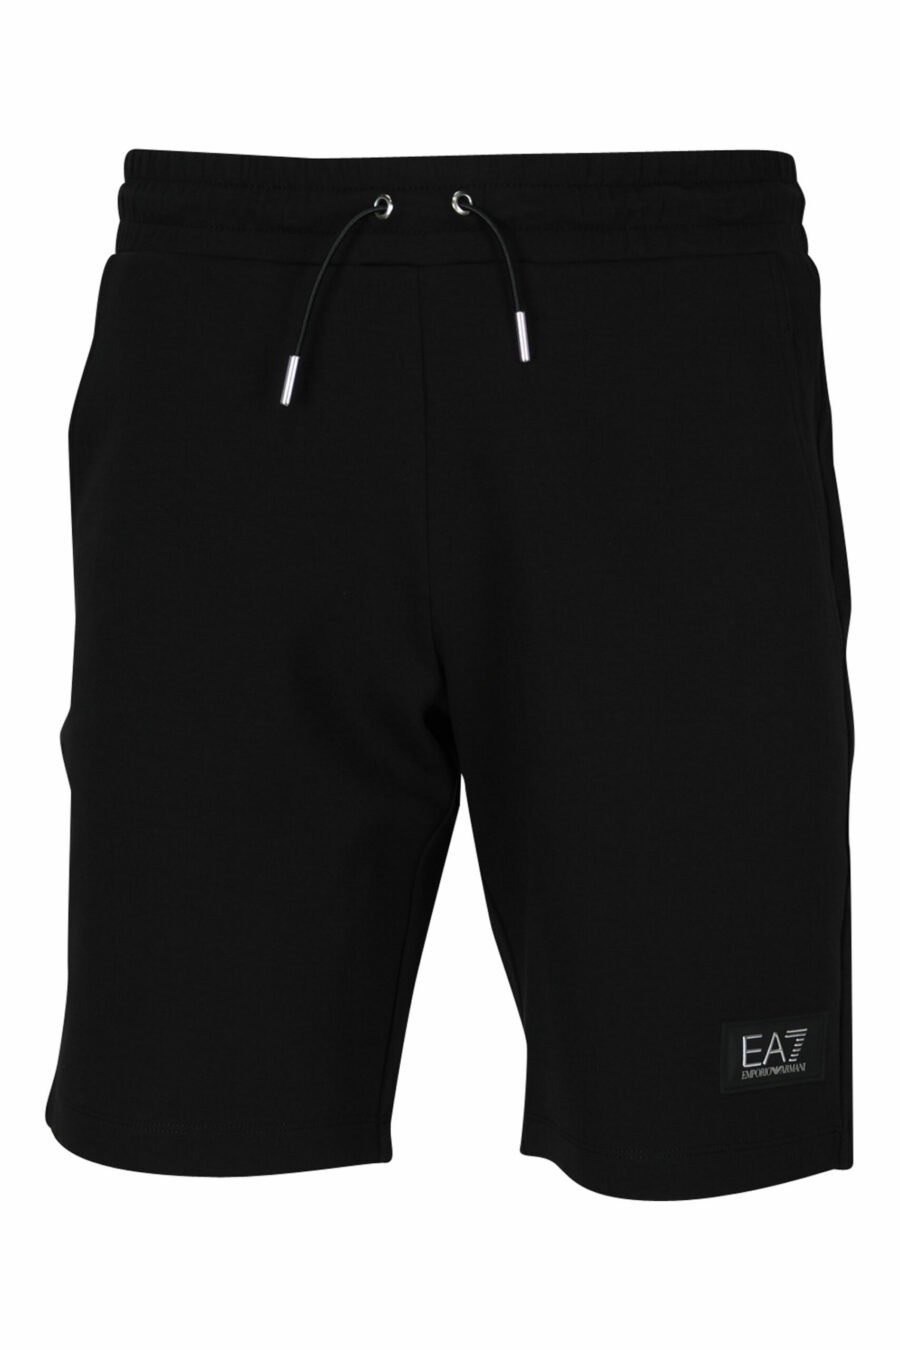 Pantalón de chándal negro corto con minilogo "lux identity" blanco en placa negro - 107531 scaled